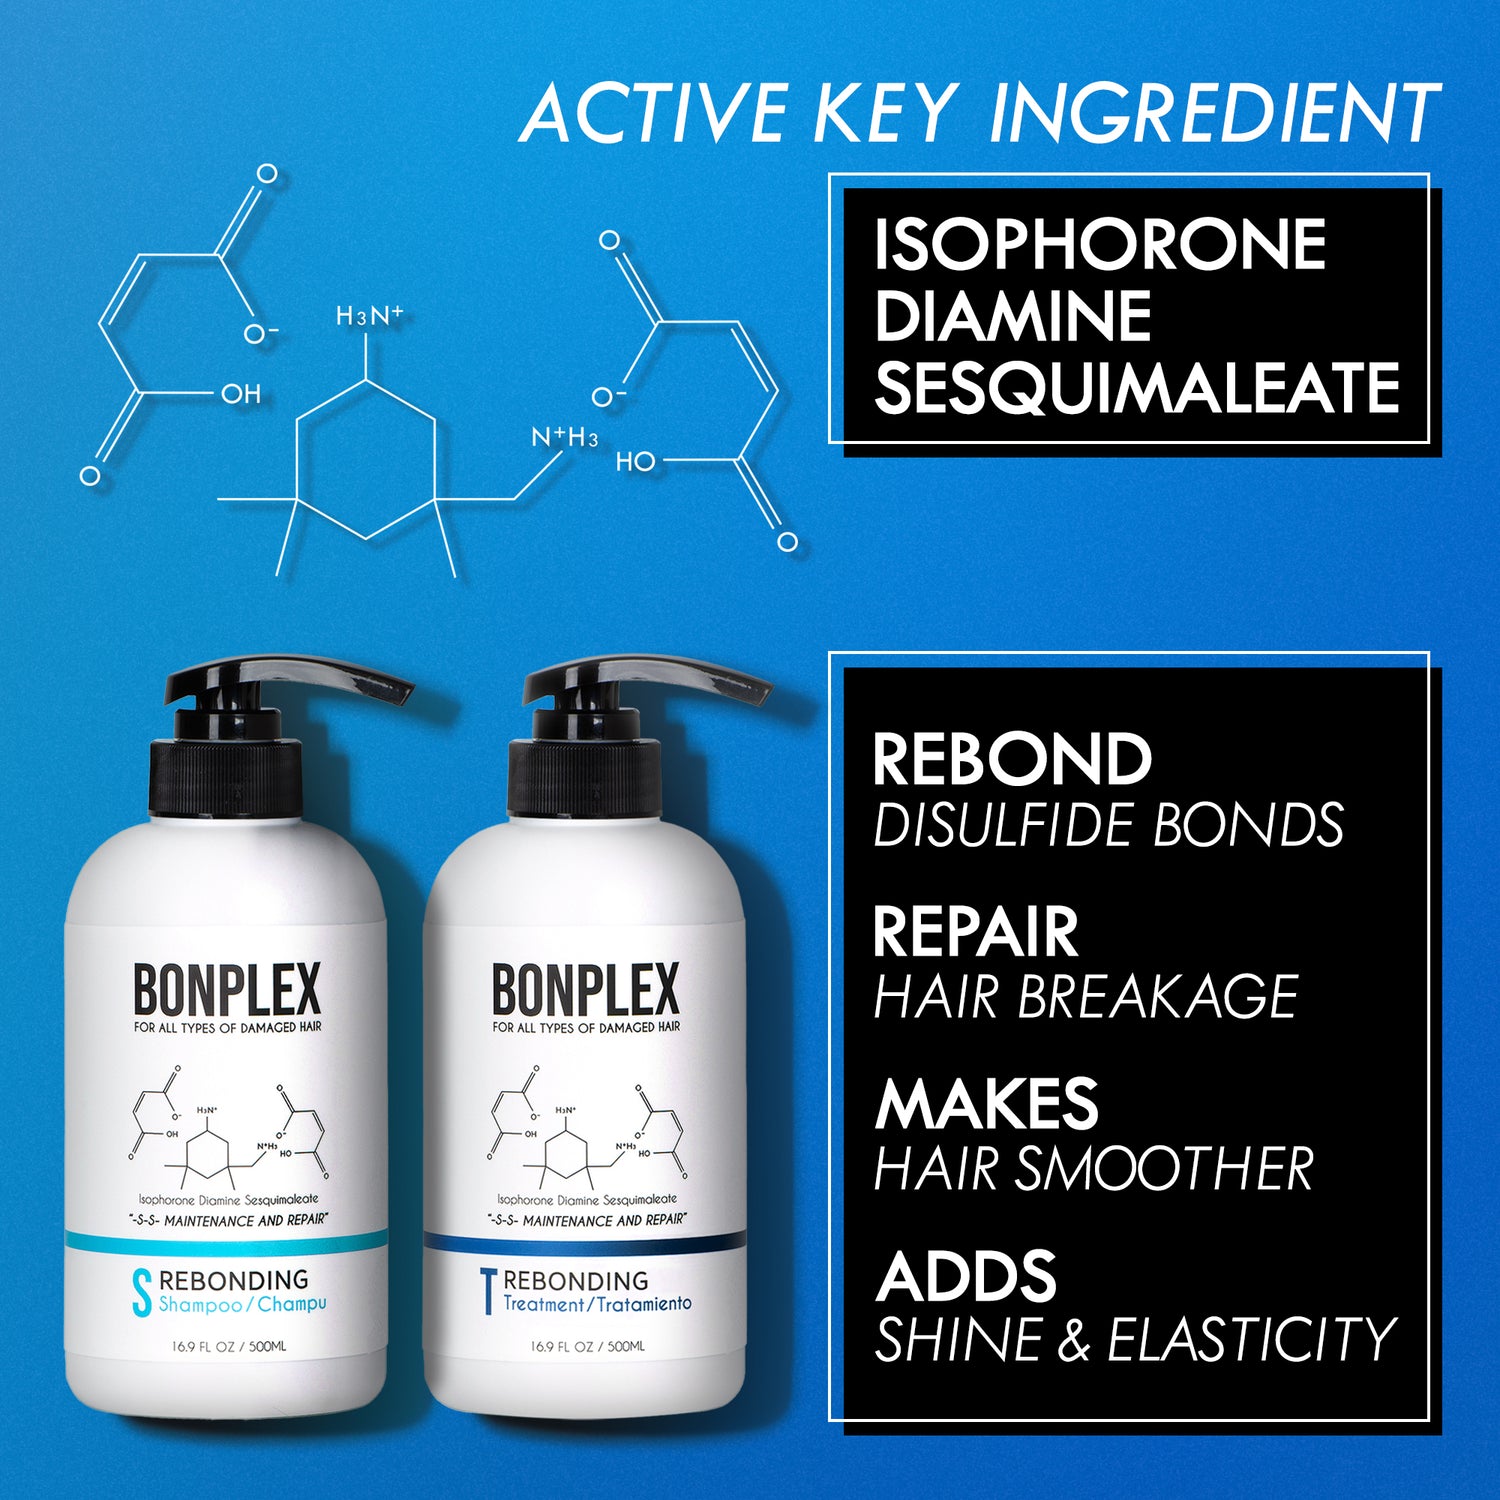 Bonplex Rebonding Shampoo and Treatment Duo Pack features